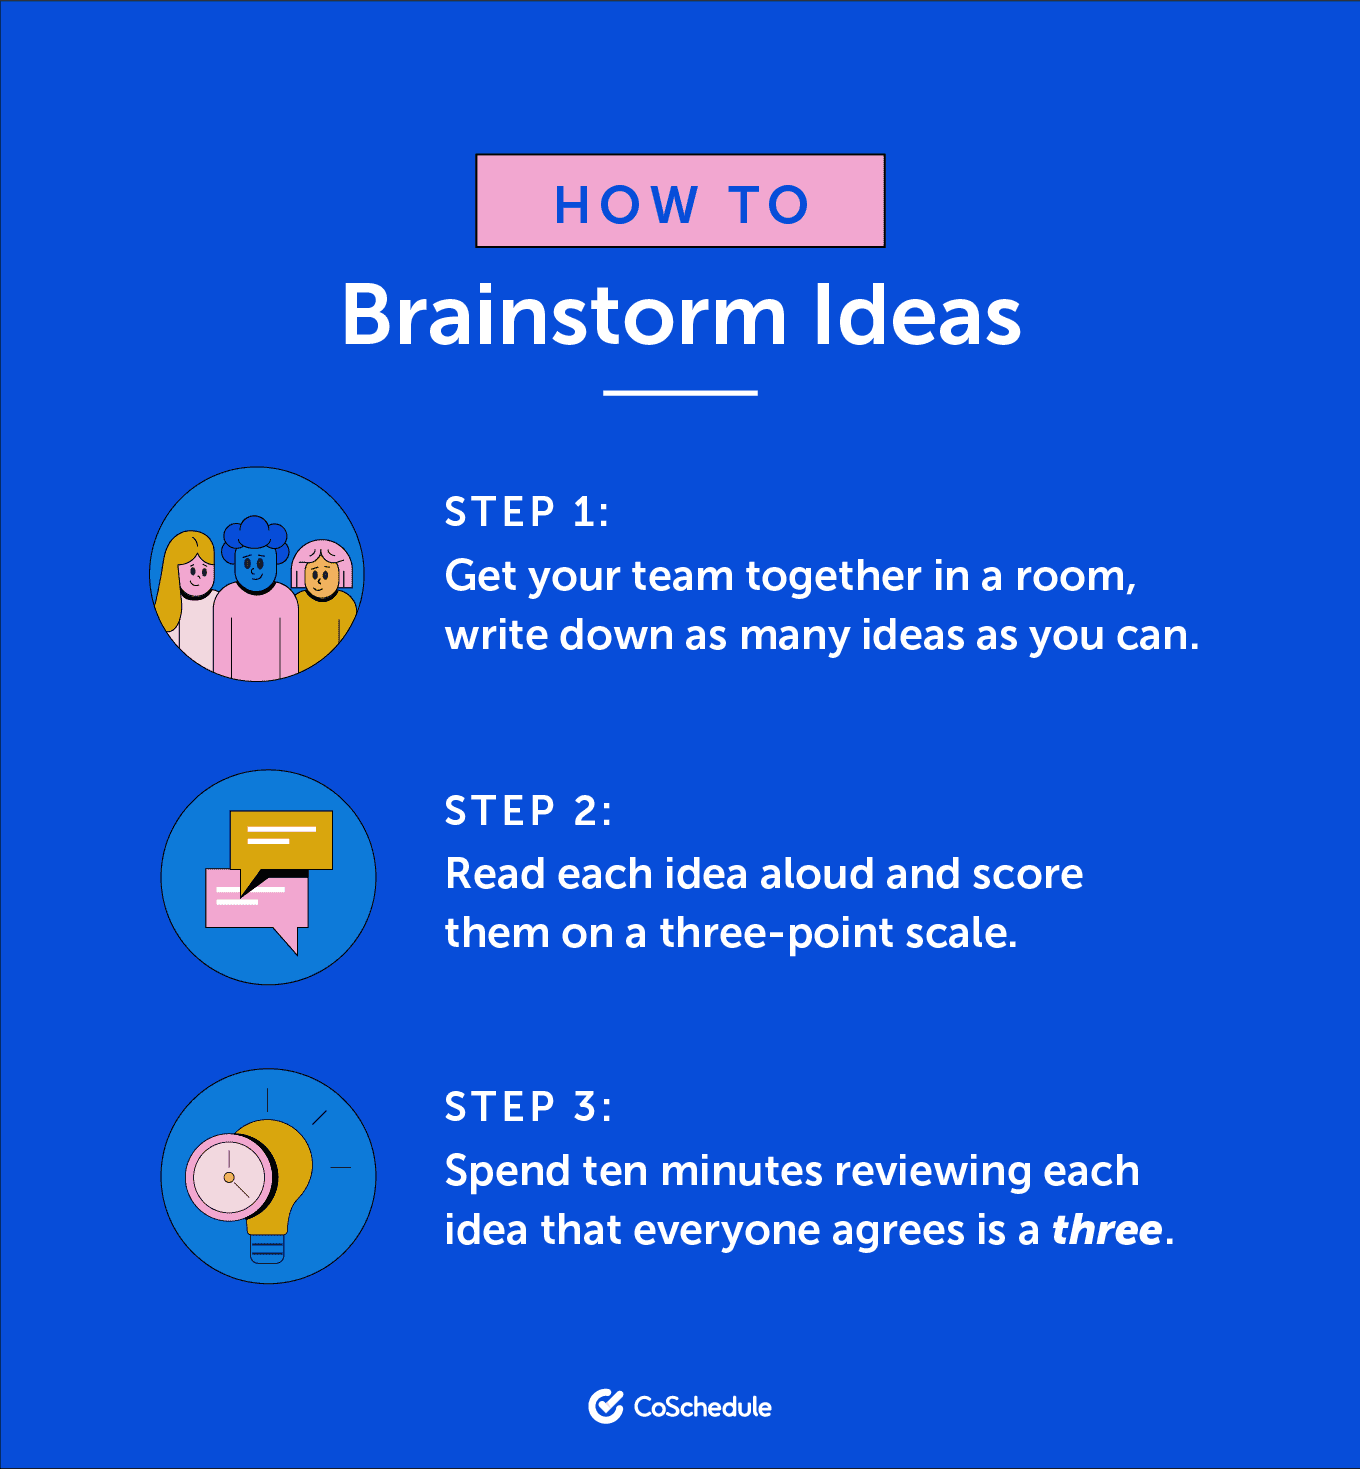 Steps to brainstorming